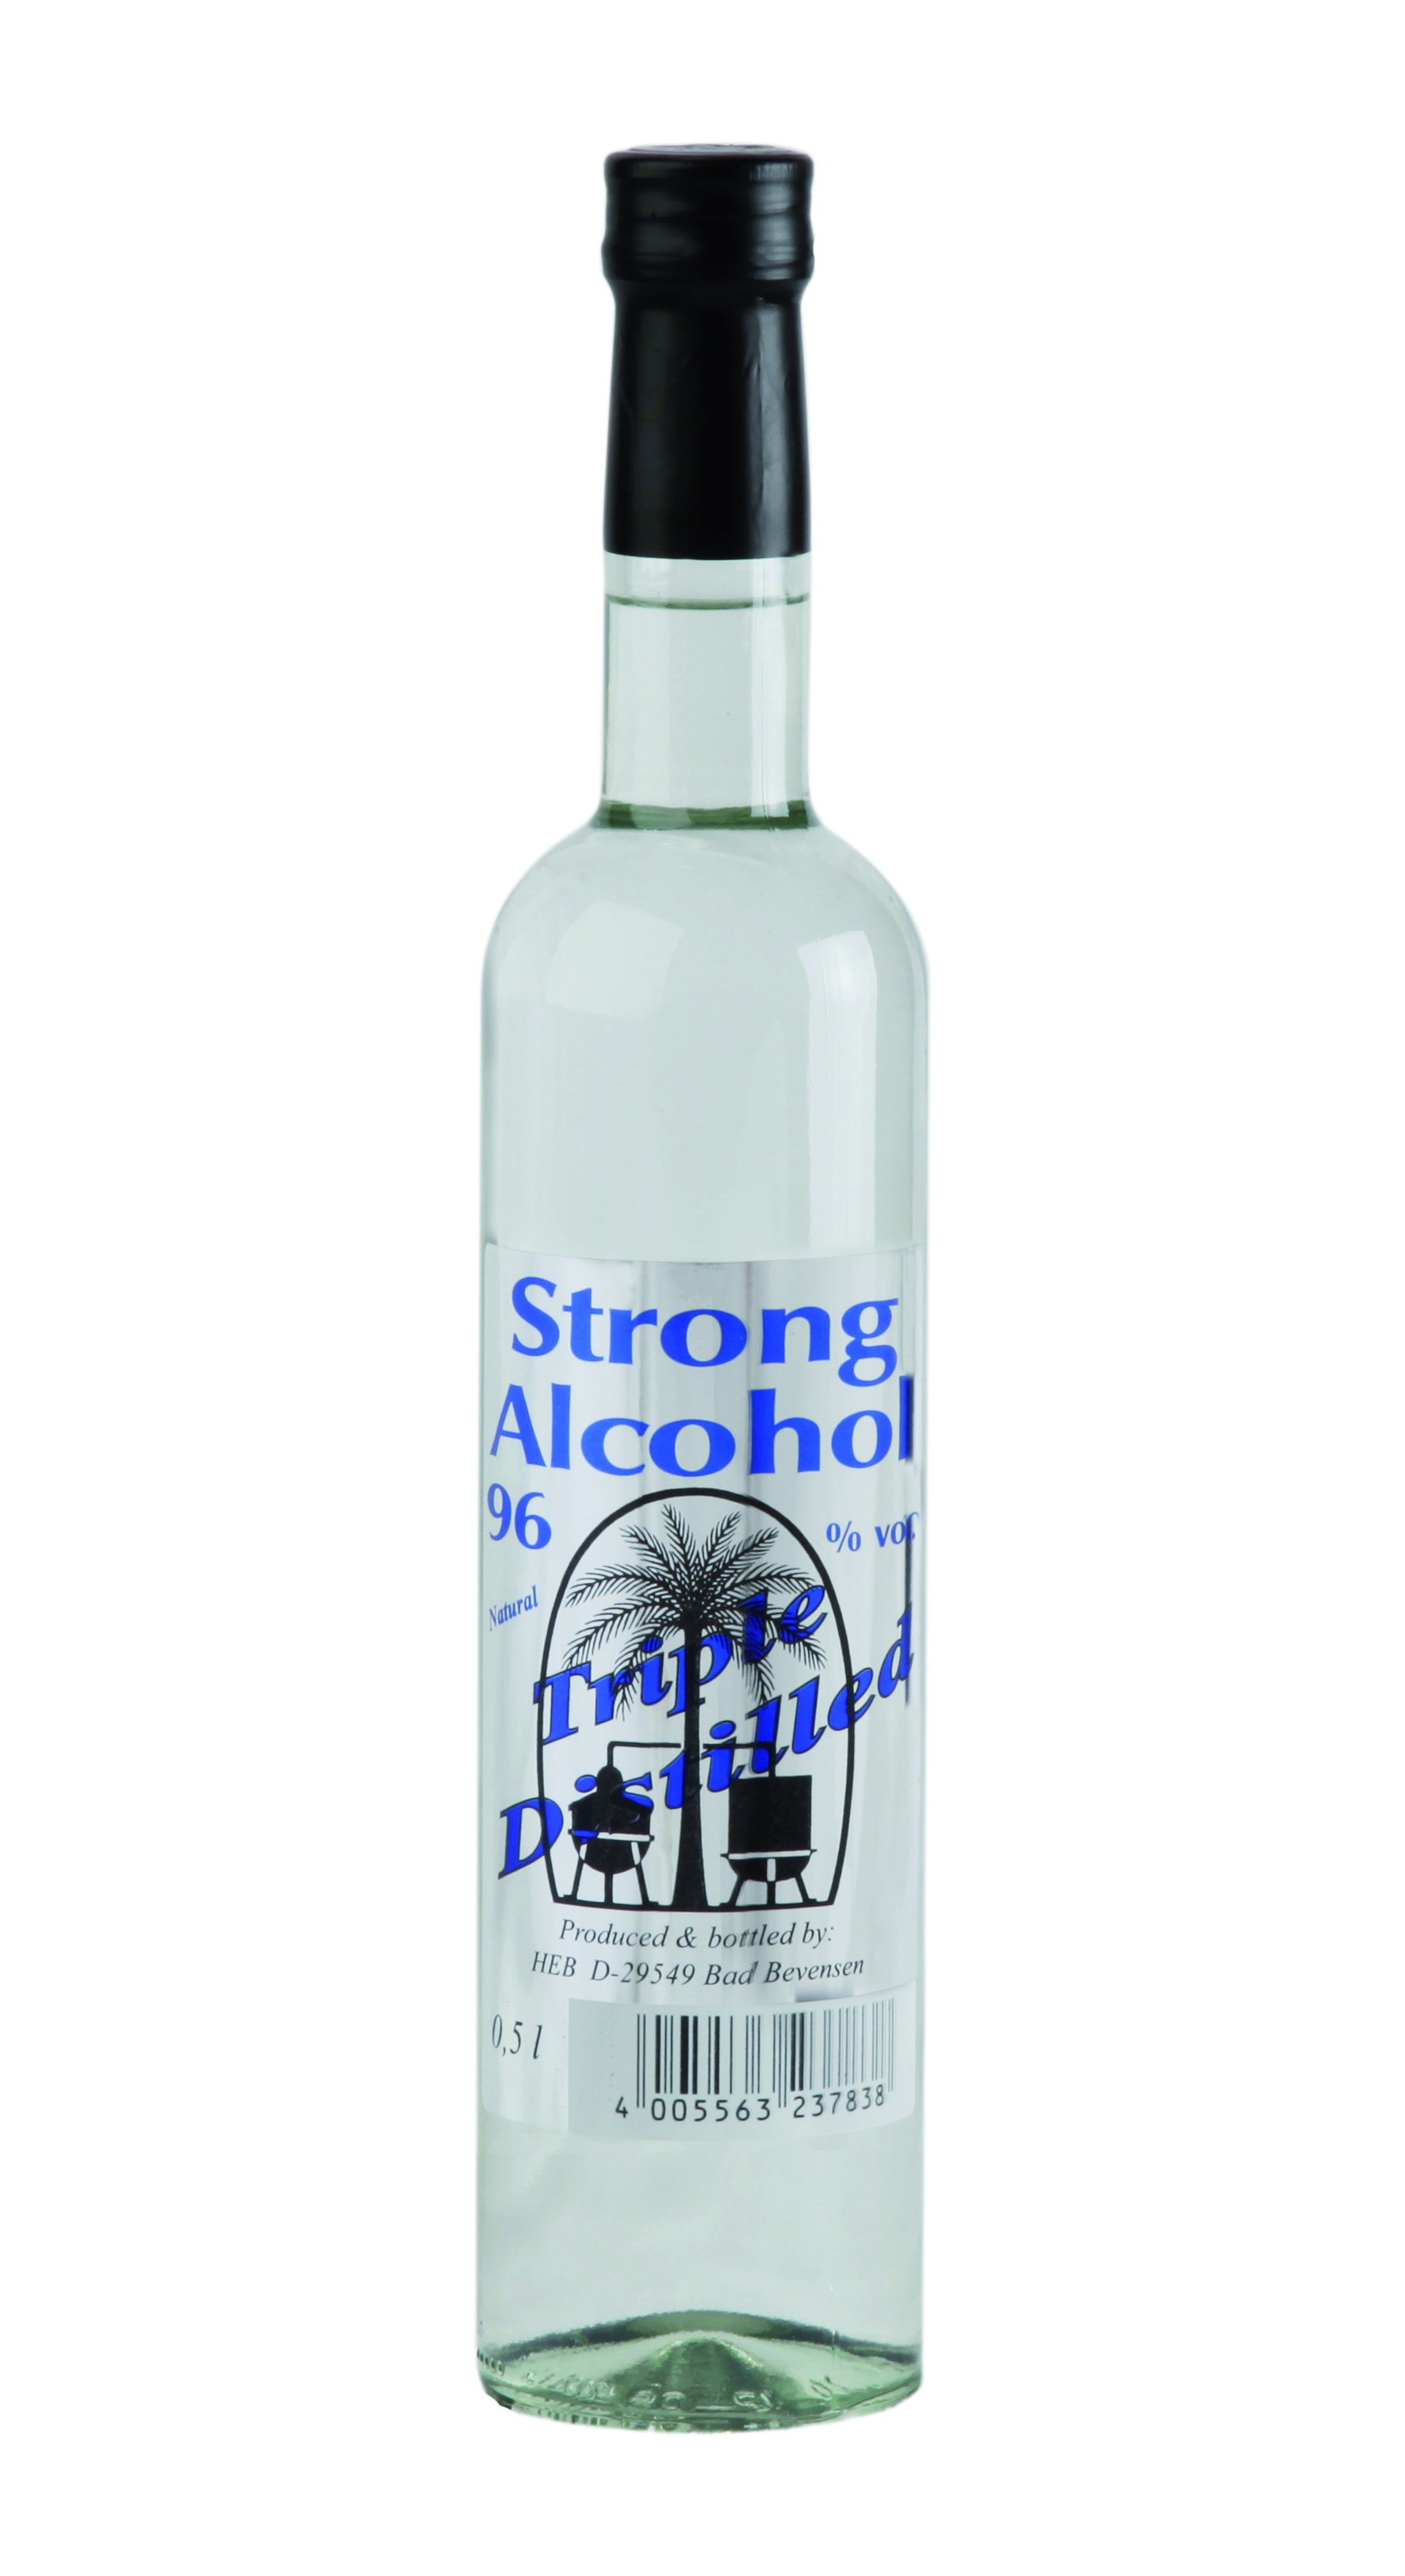 Strong Alcohol 96, Schnaps, Alkohol - 96% vol - (0,5L)